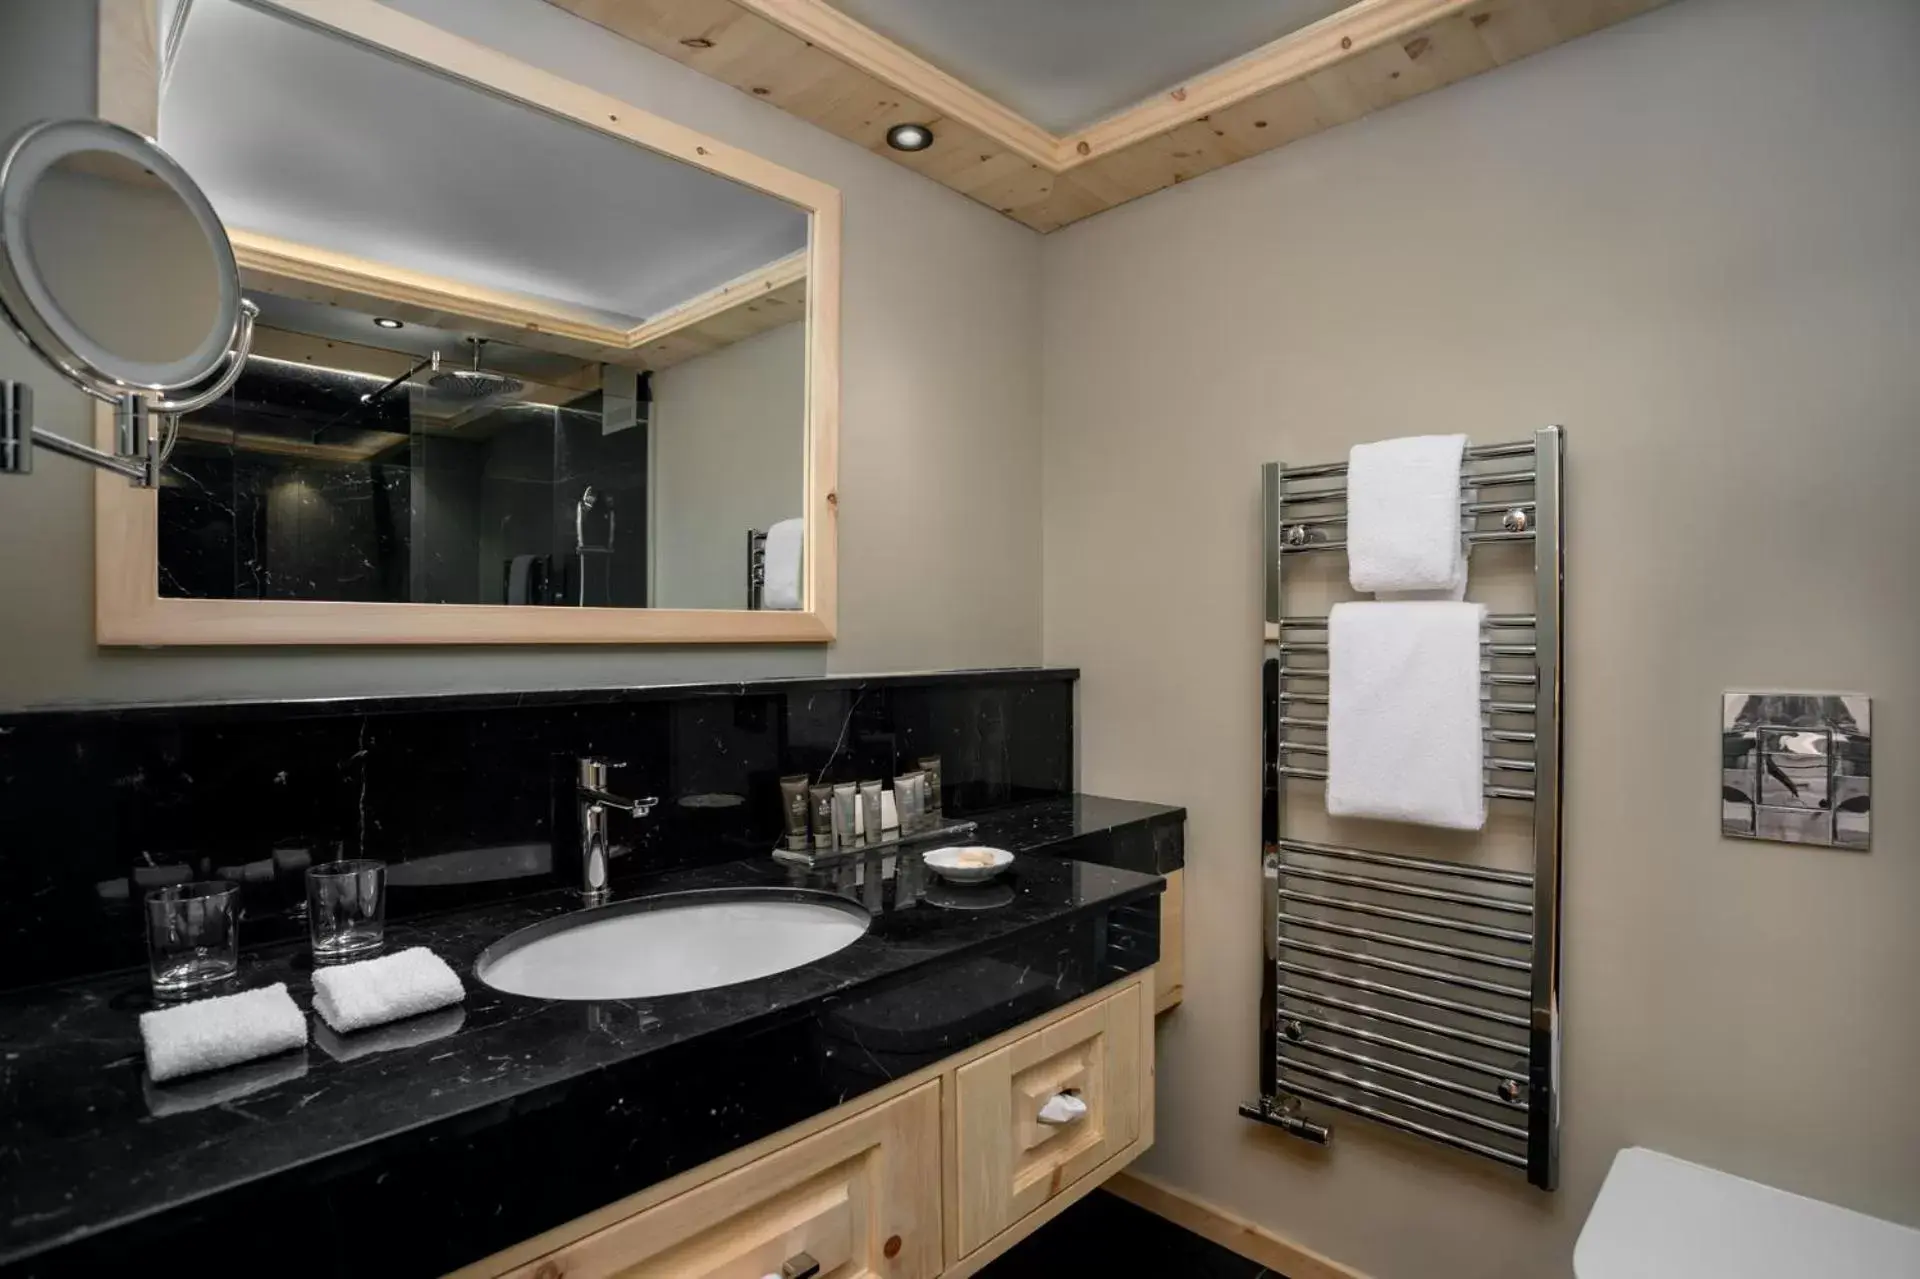 Bathroom in Precise Tale Seehof Davos